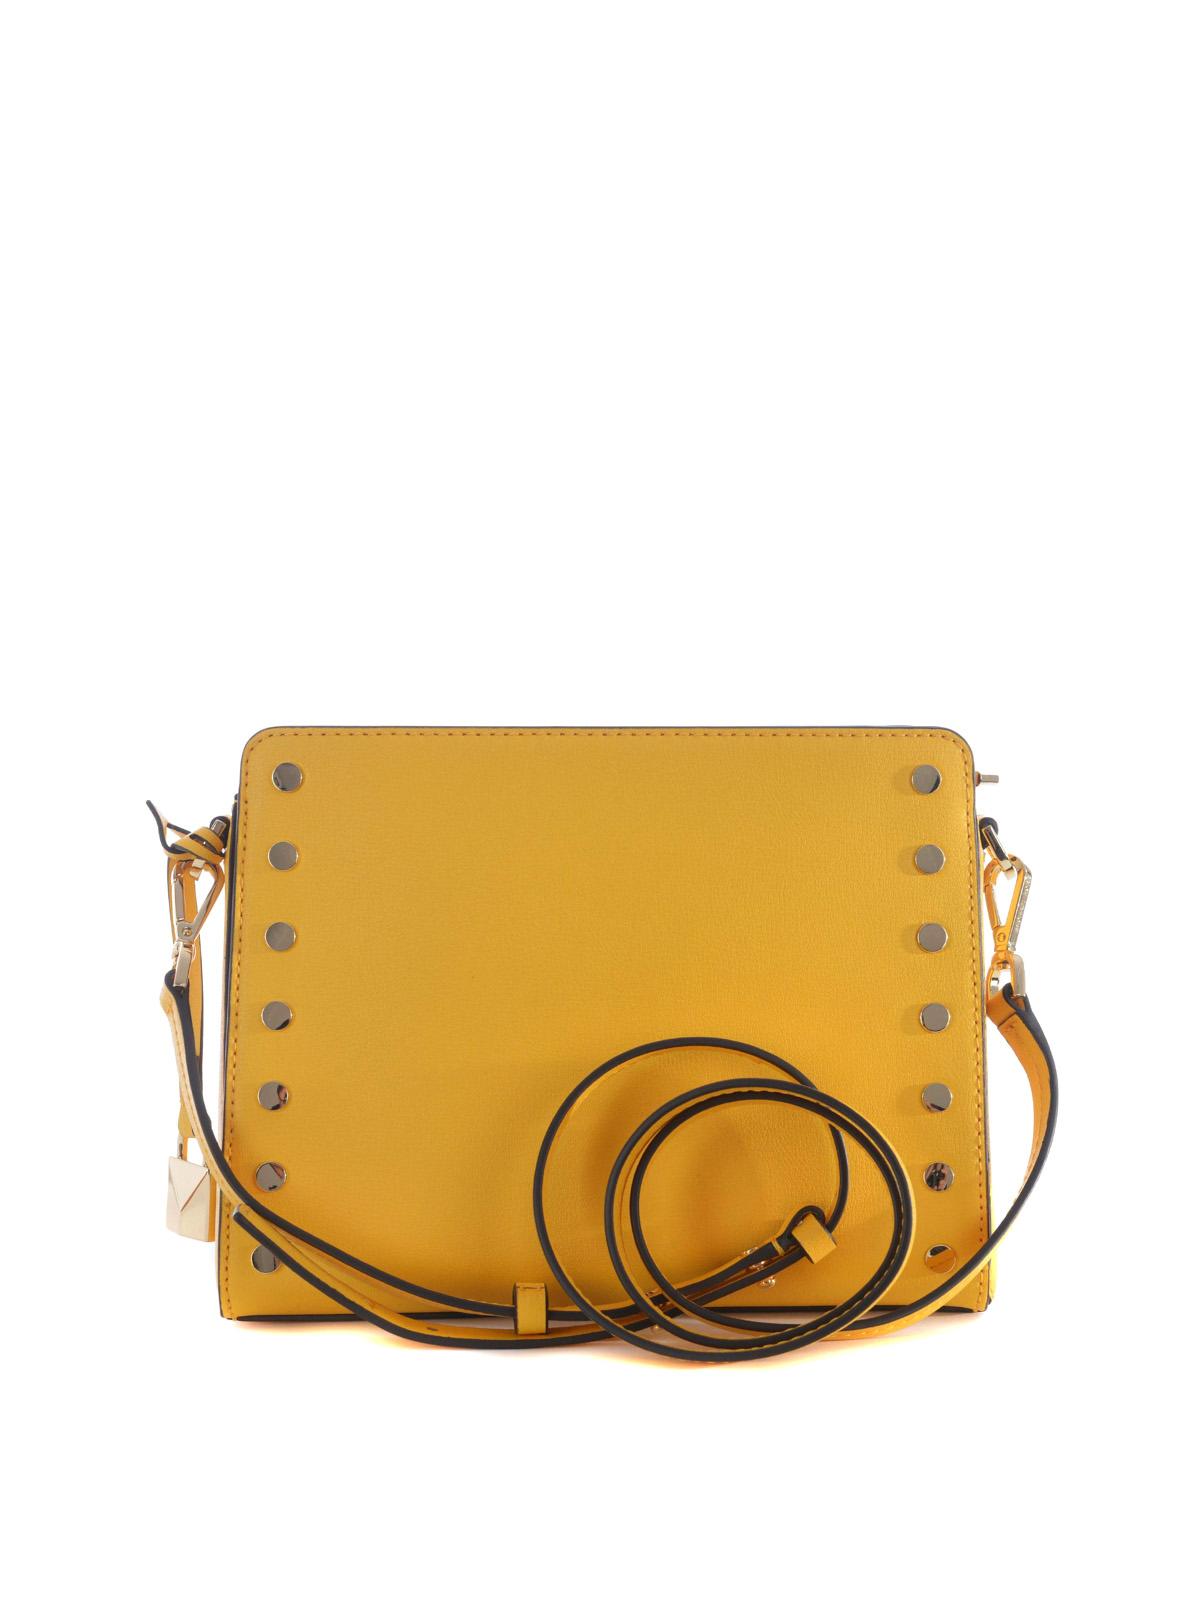 Michael Kors Saffiano Leather Studded Crossbody Bag - Yellow